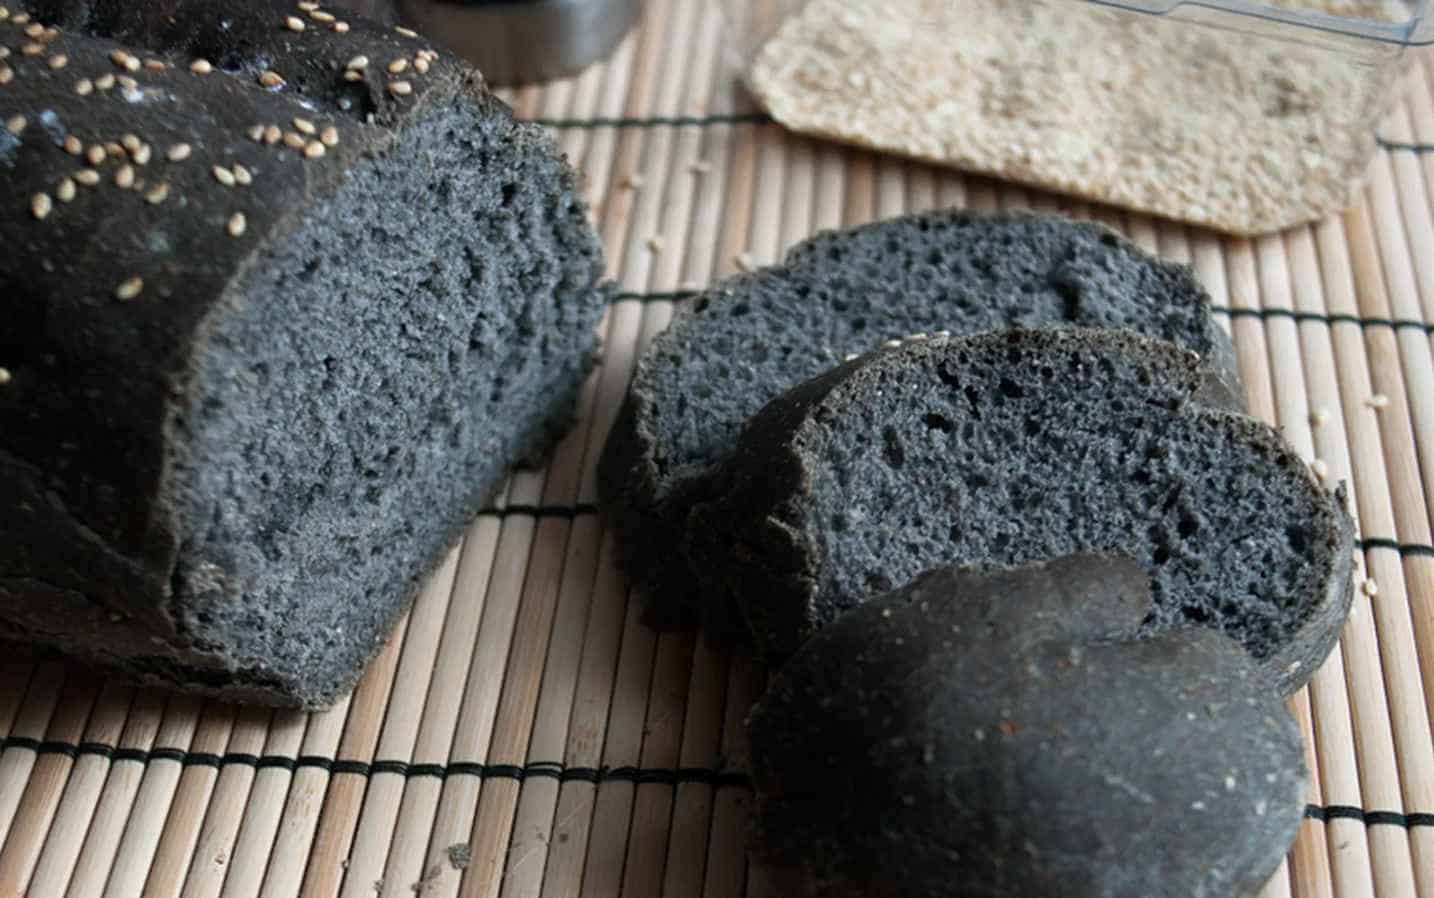 Basic Black Vegan Bread